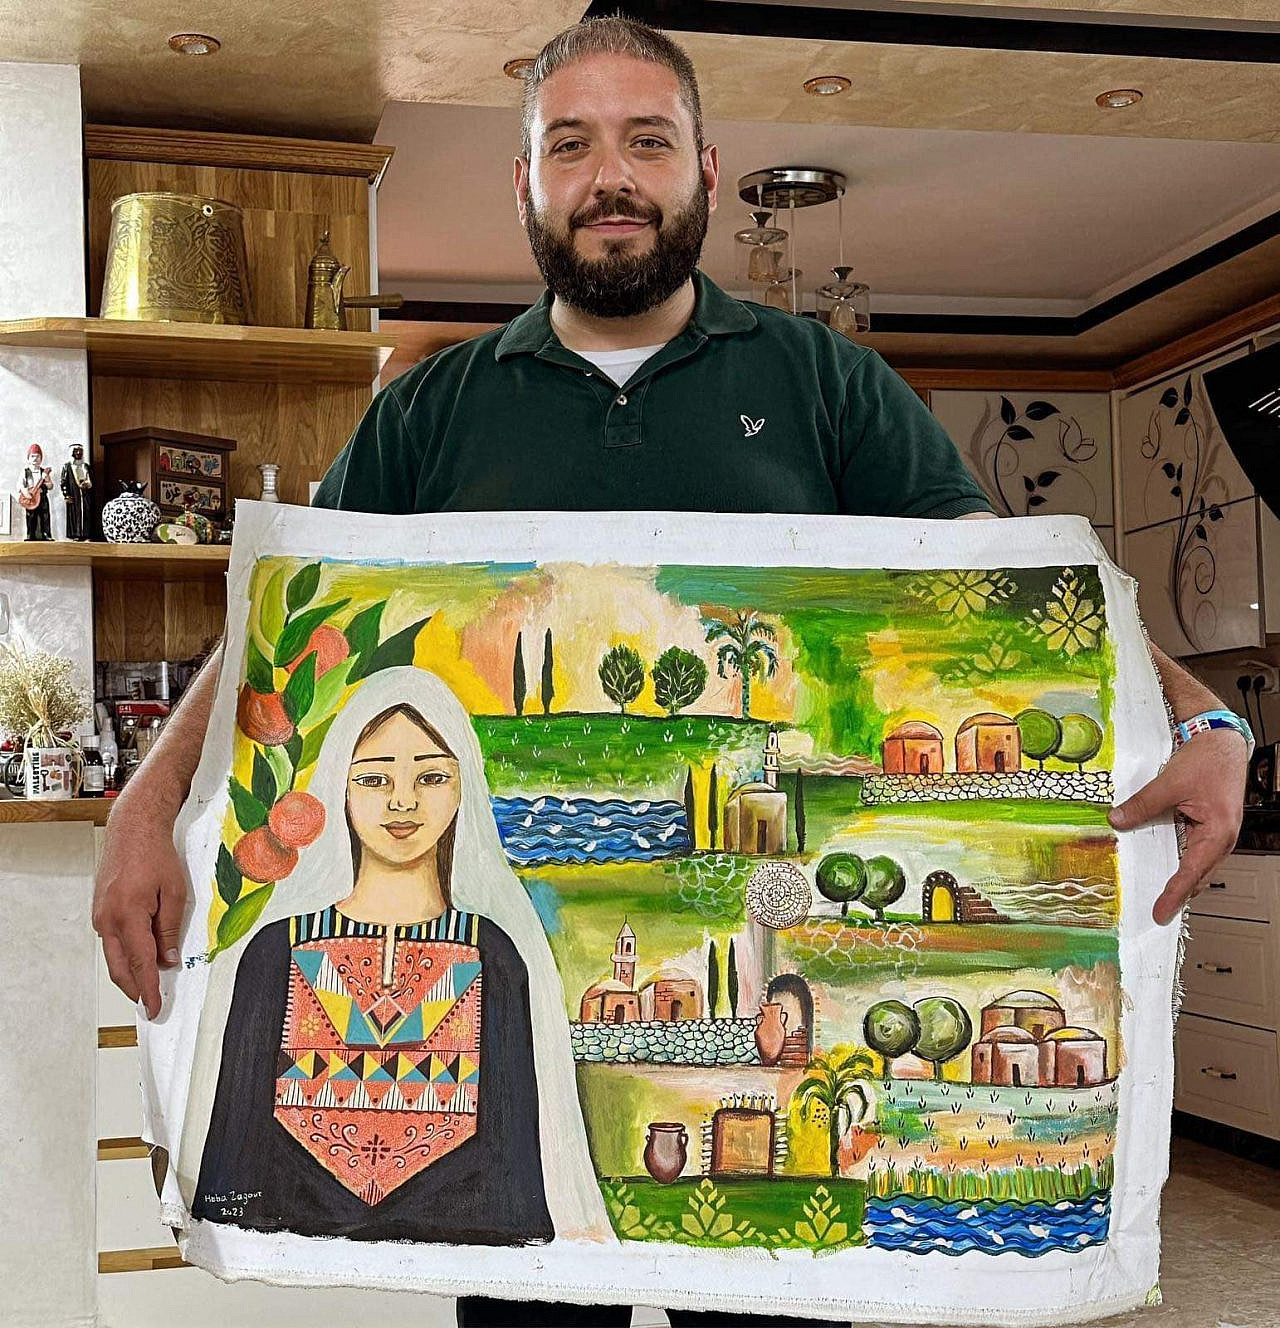 Chris Whitman holds the artwork "Asdood" by Heba Zagout. (Courtesy of Chris Whitman)